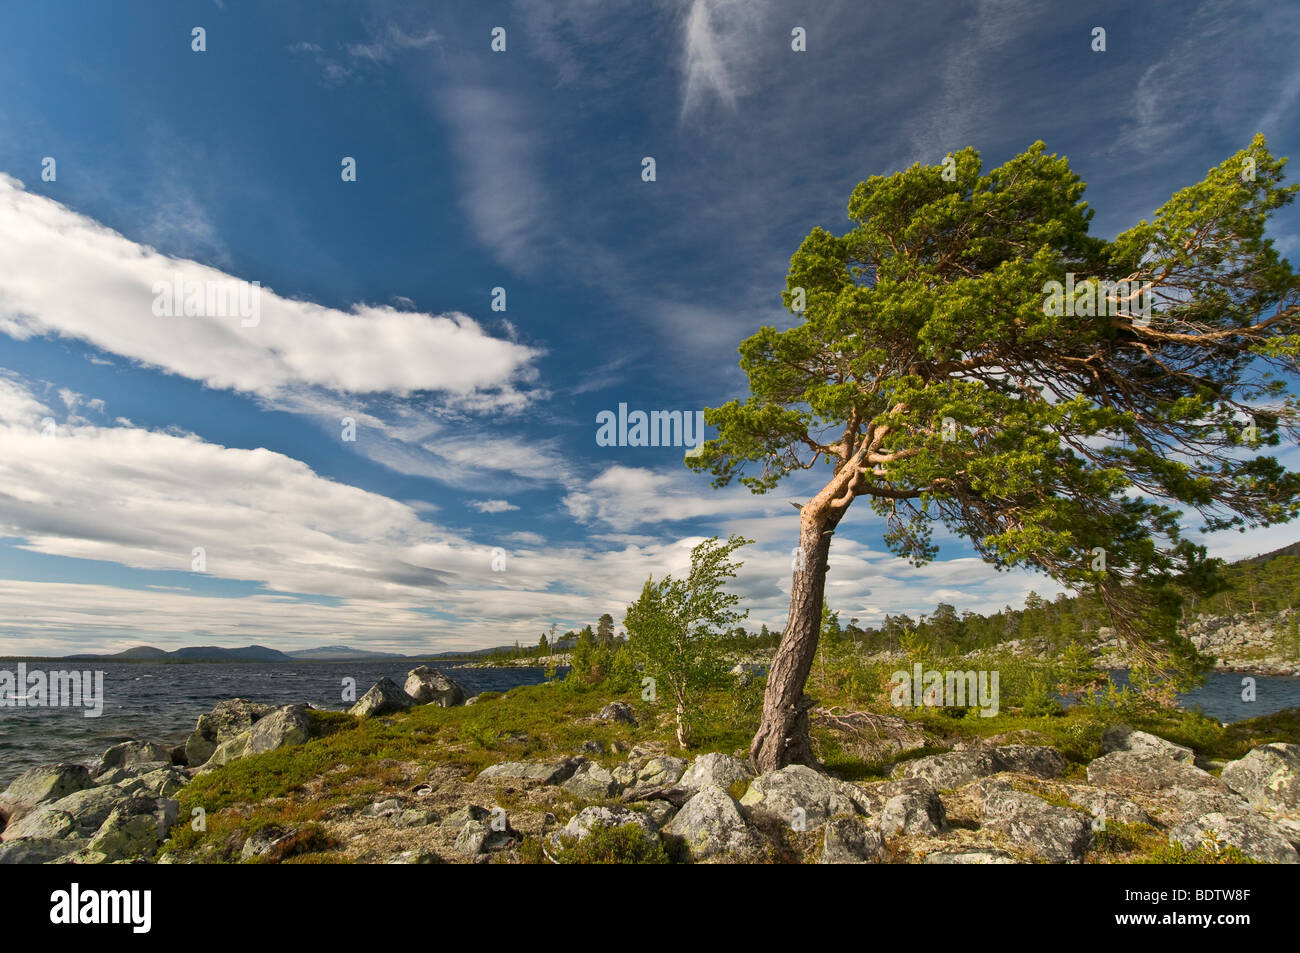 kiefer am see rogen, naturreservat rogen, haerjedalen, schweden, pine tree at lake rogen, nature reserve, sweden Stock Photo